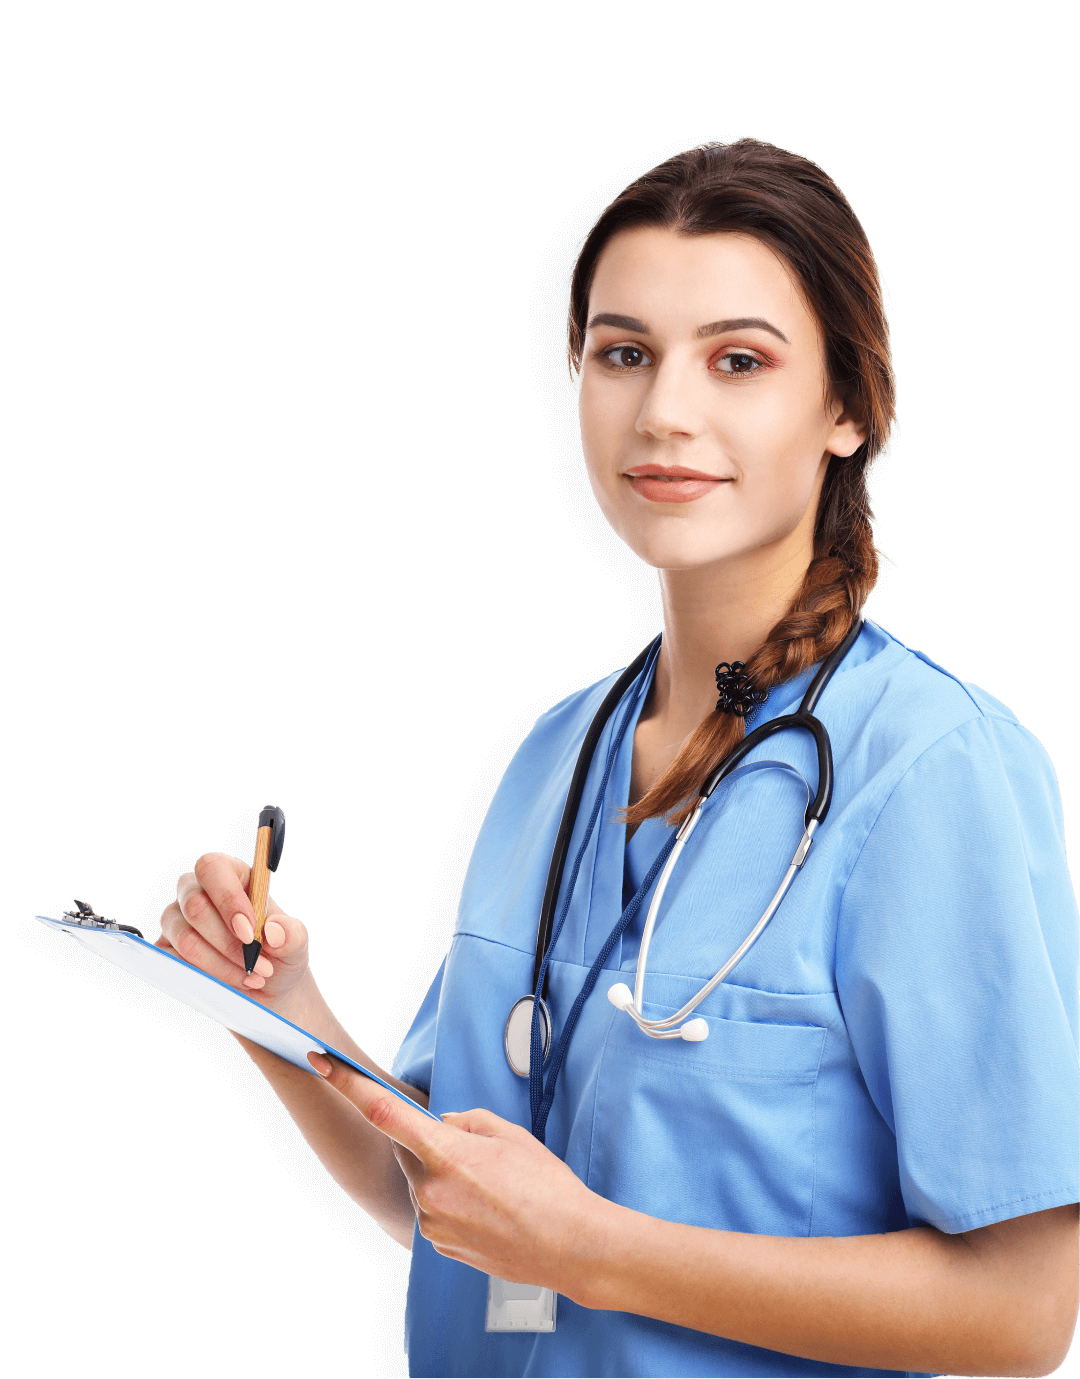 Nurse-Continence professional